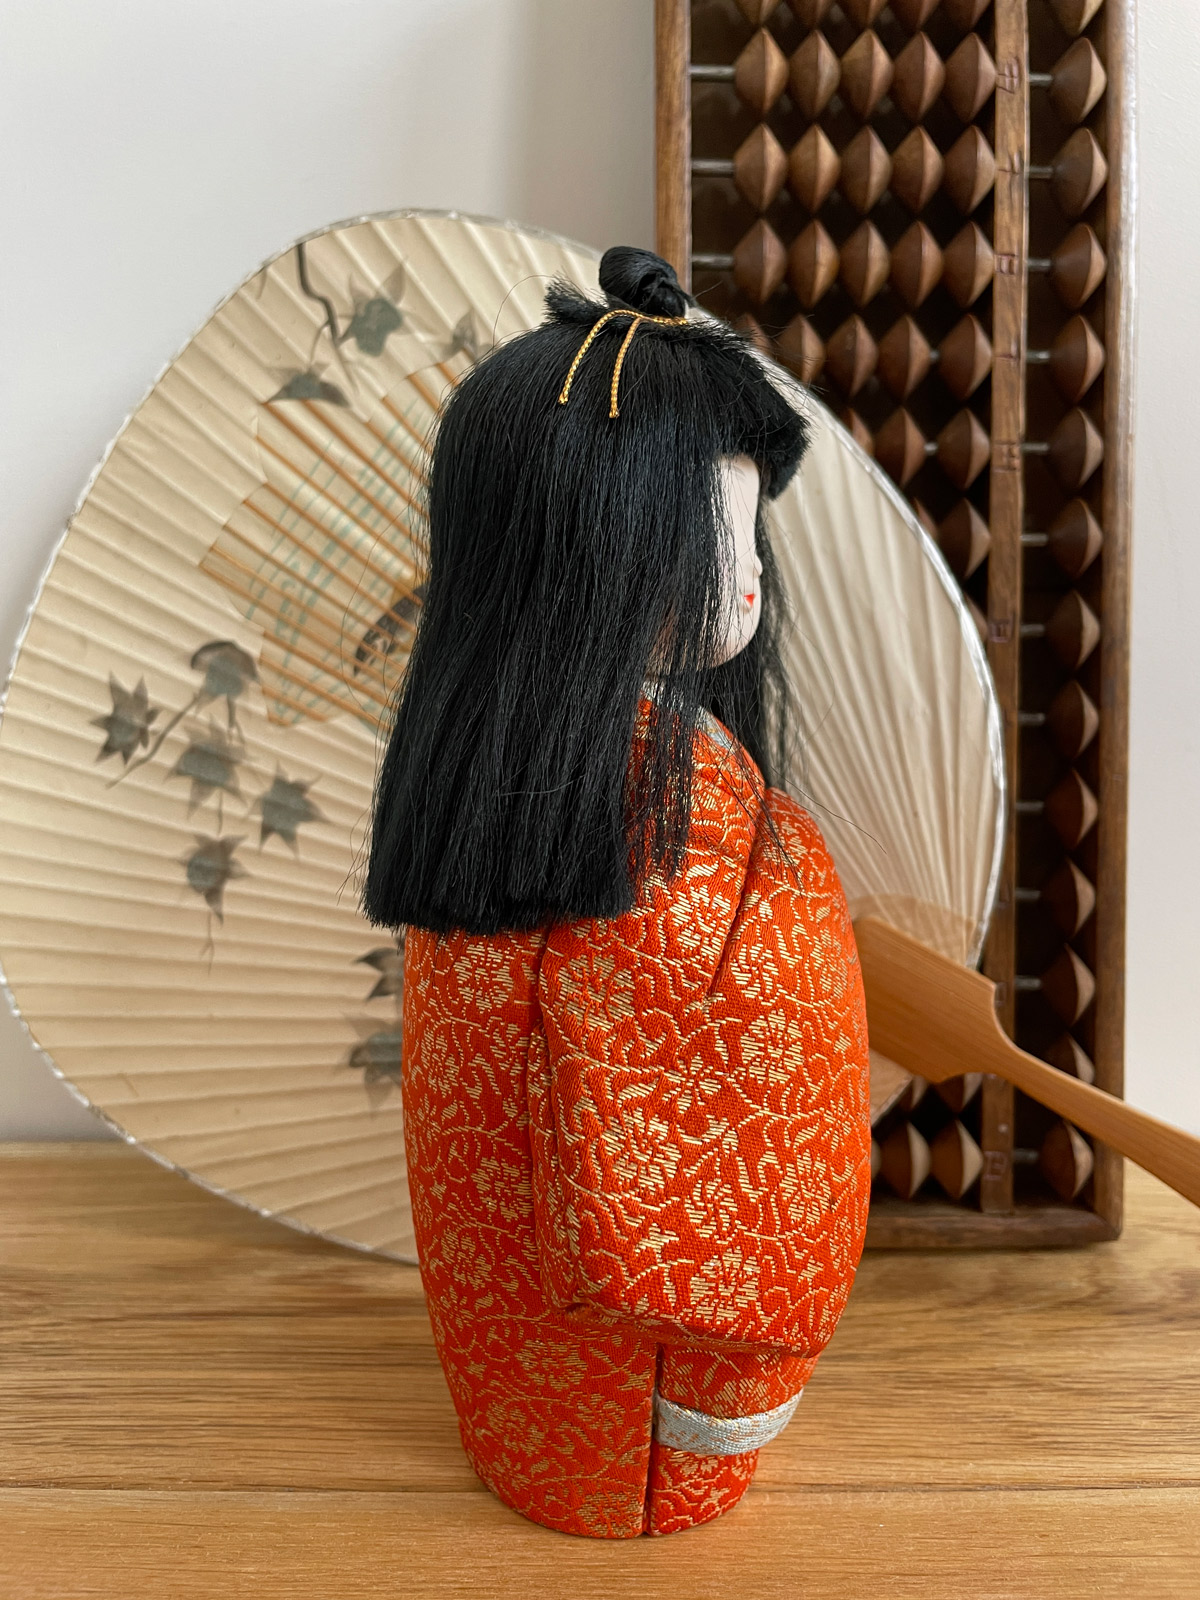 Kimekomi doll wearing bright orange Kimono